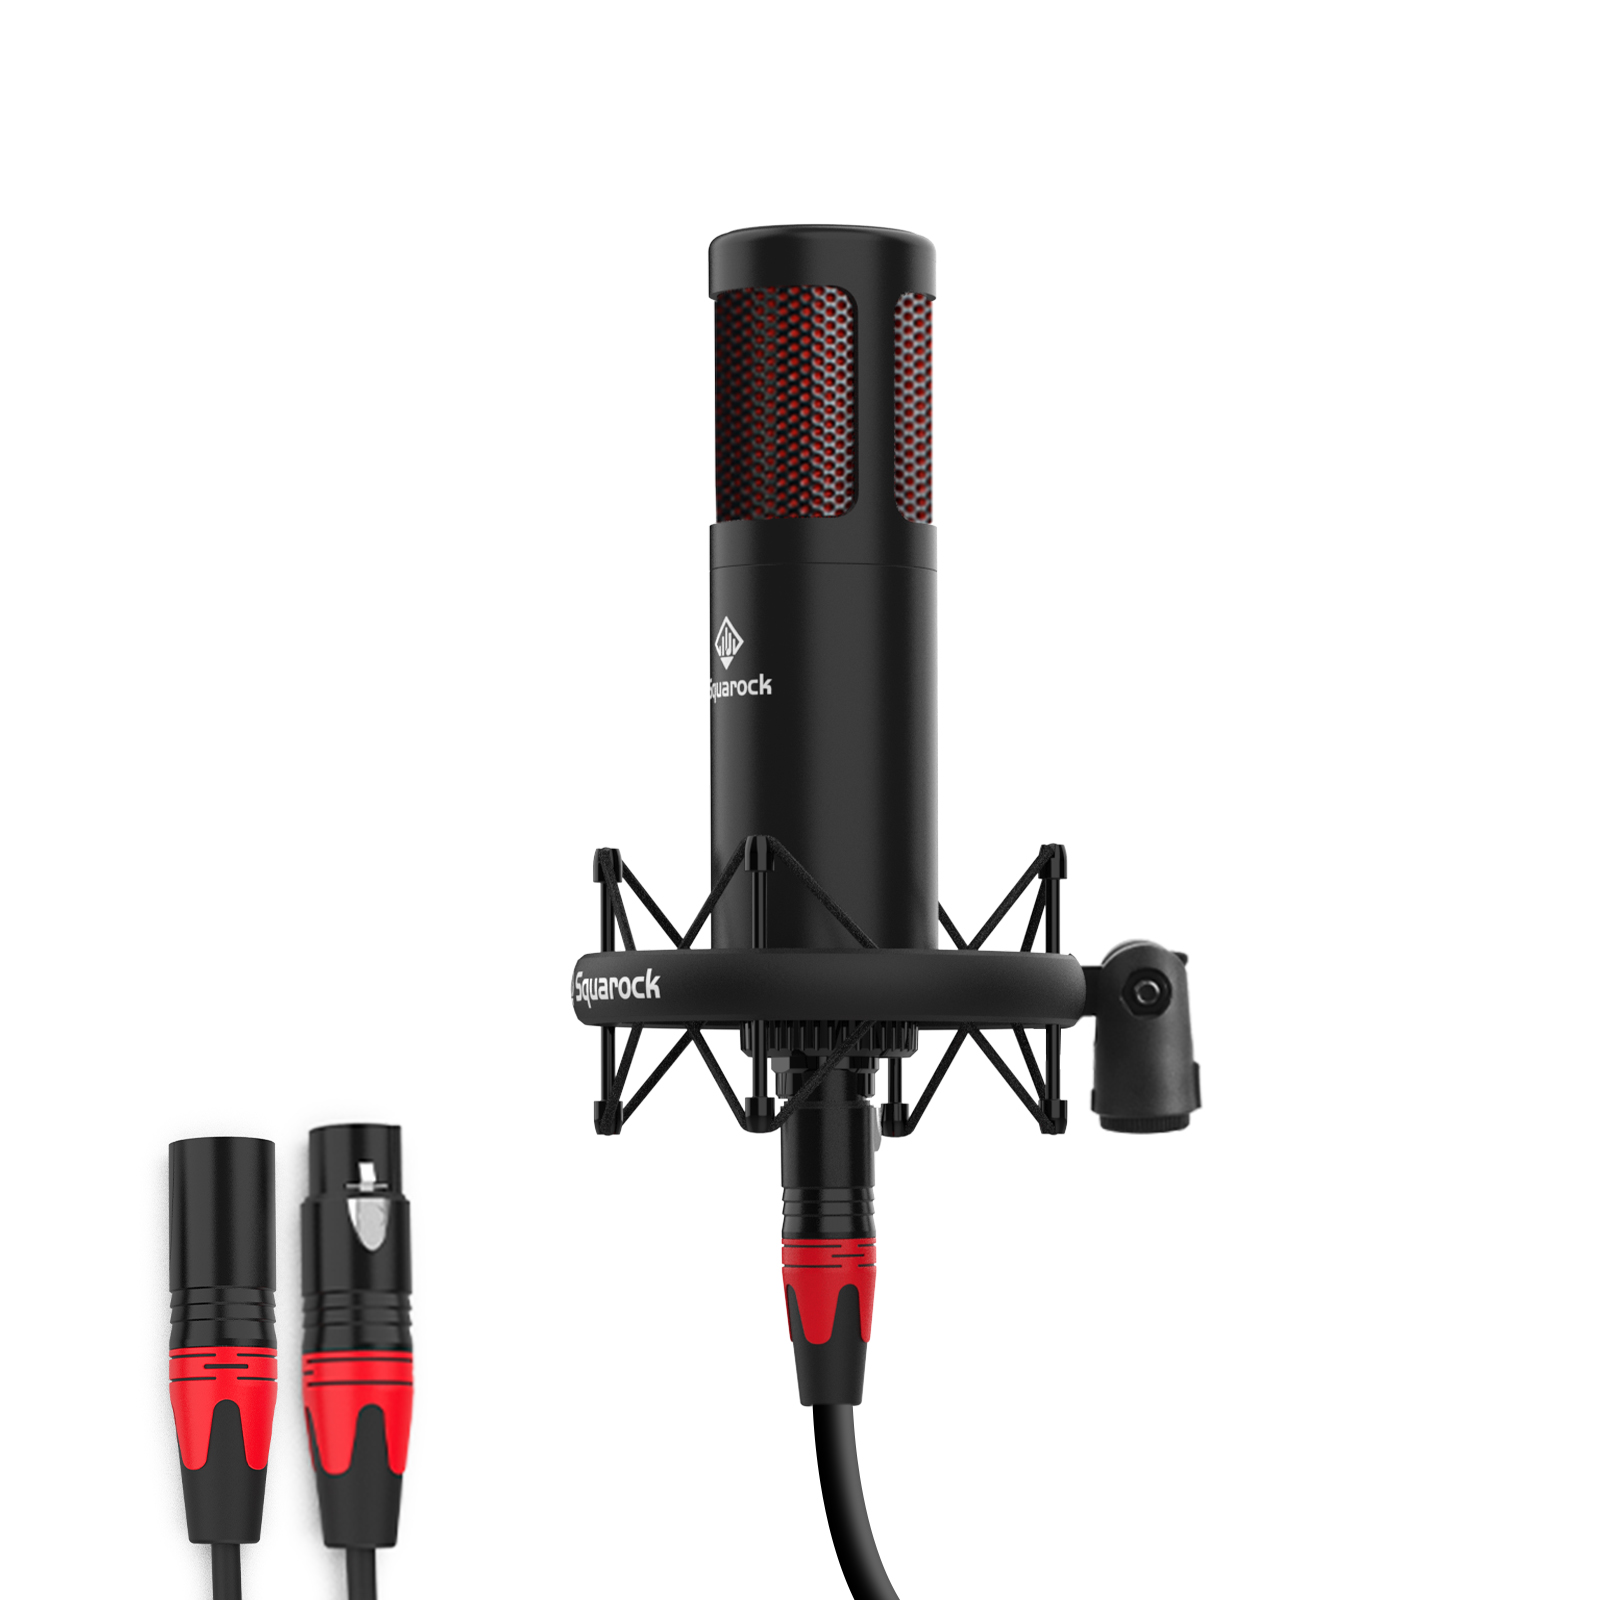 Squarock STU1+ Upgraded 48V Podcast Microphone